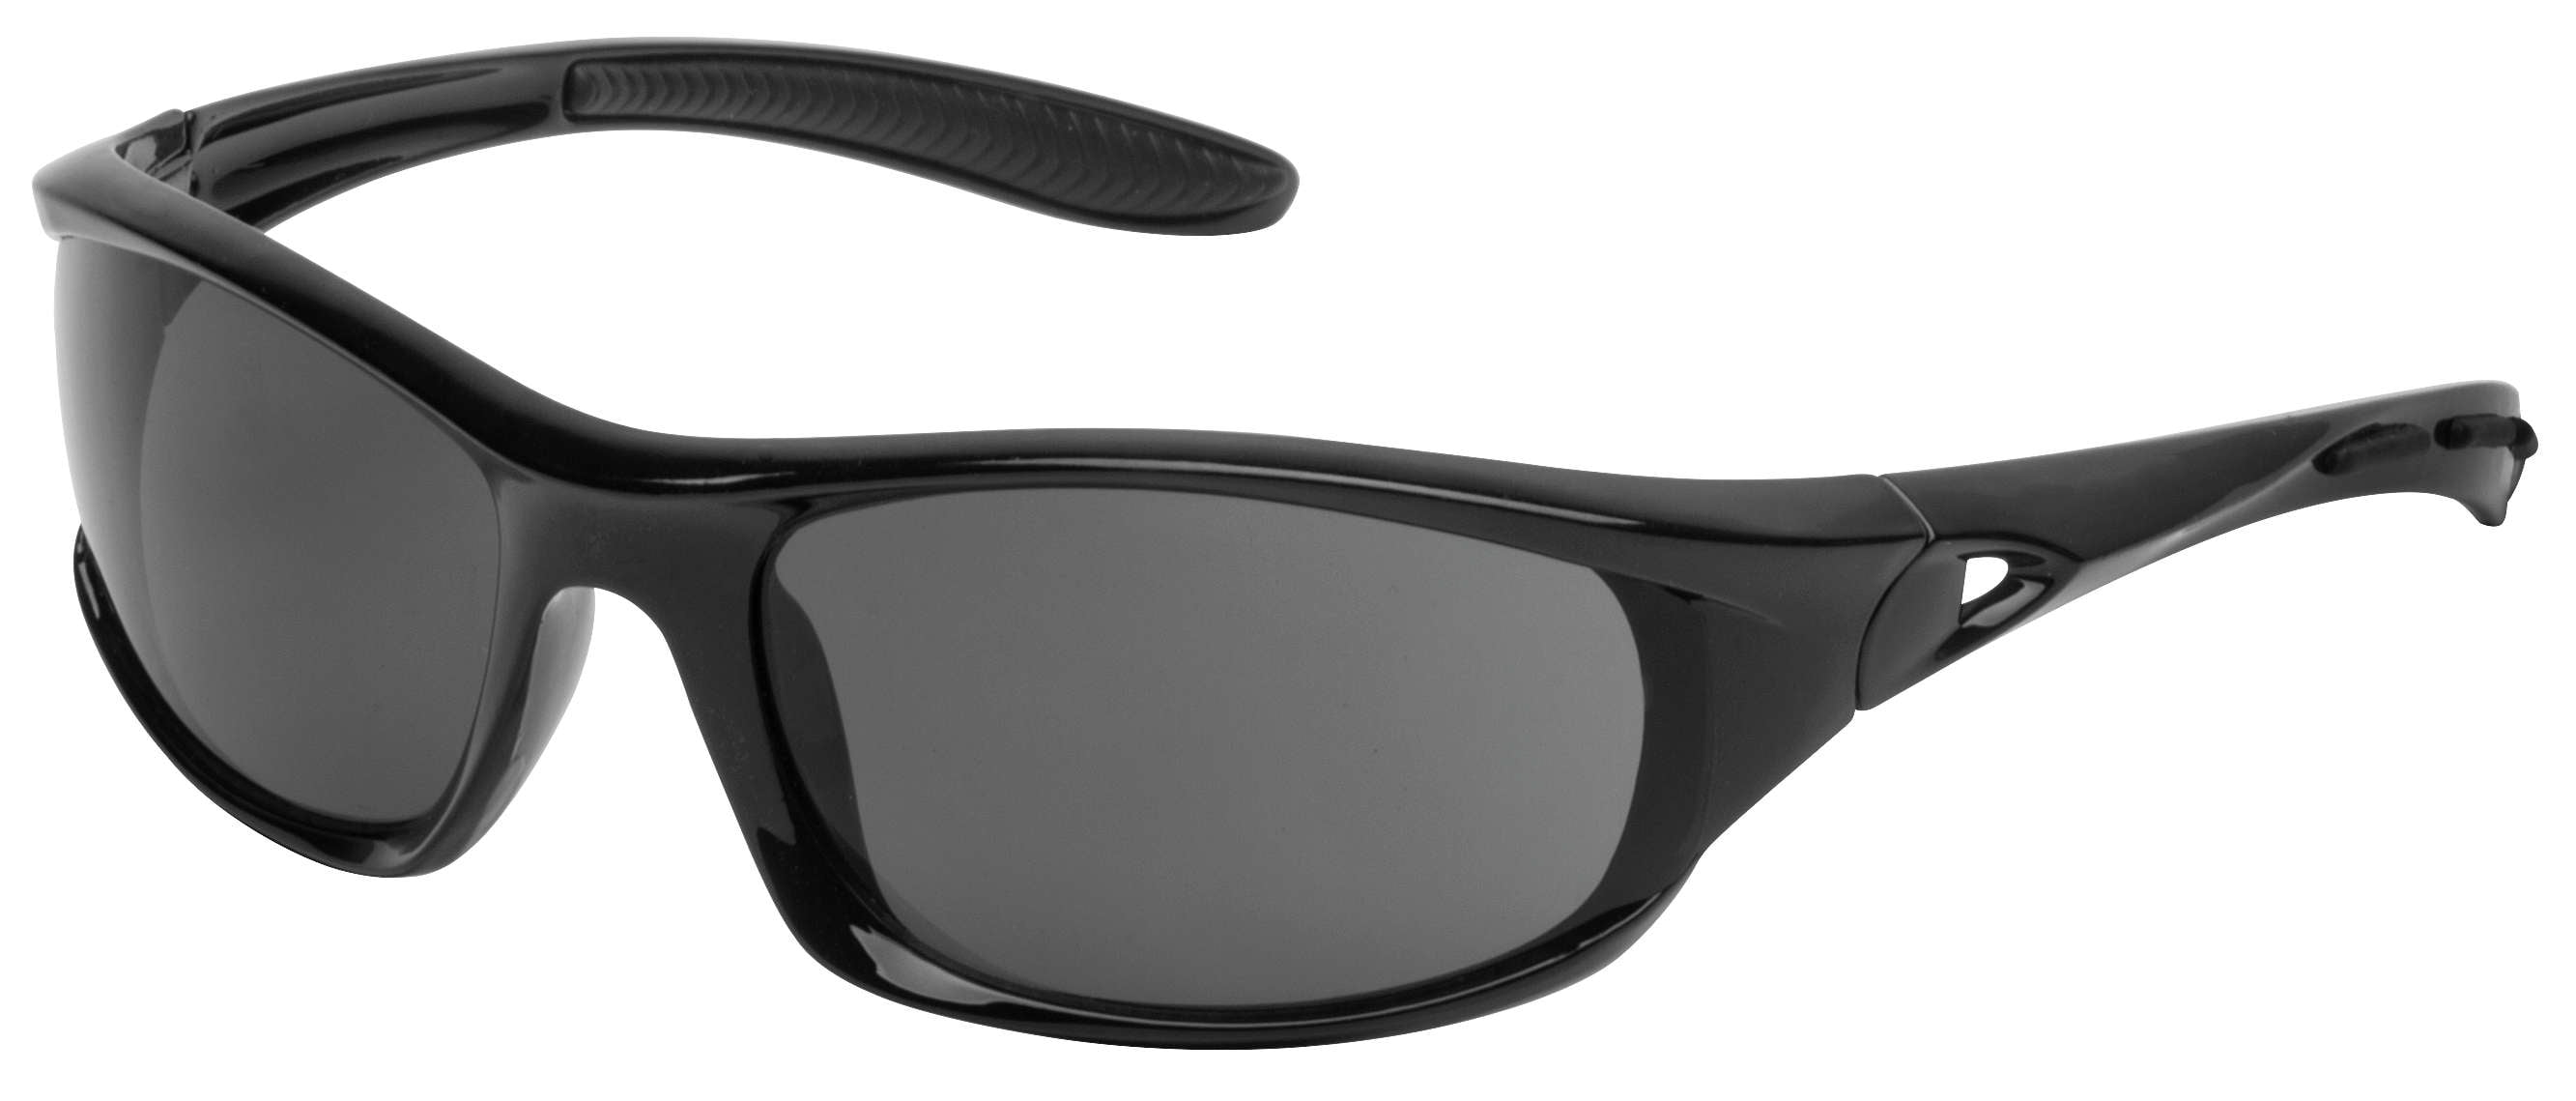 Bobster Mens Anchor Polarized Sunglasses,OS,Black/Smoke